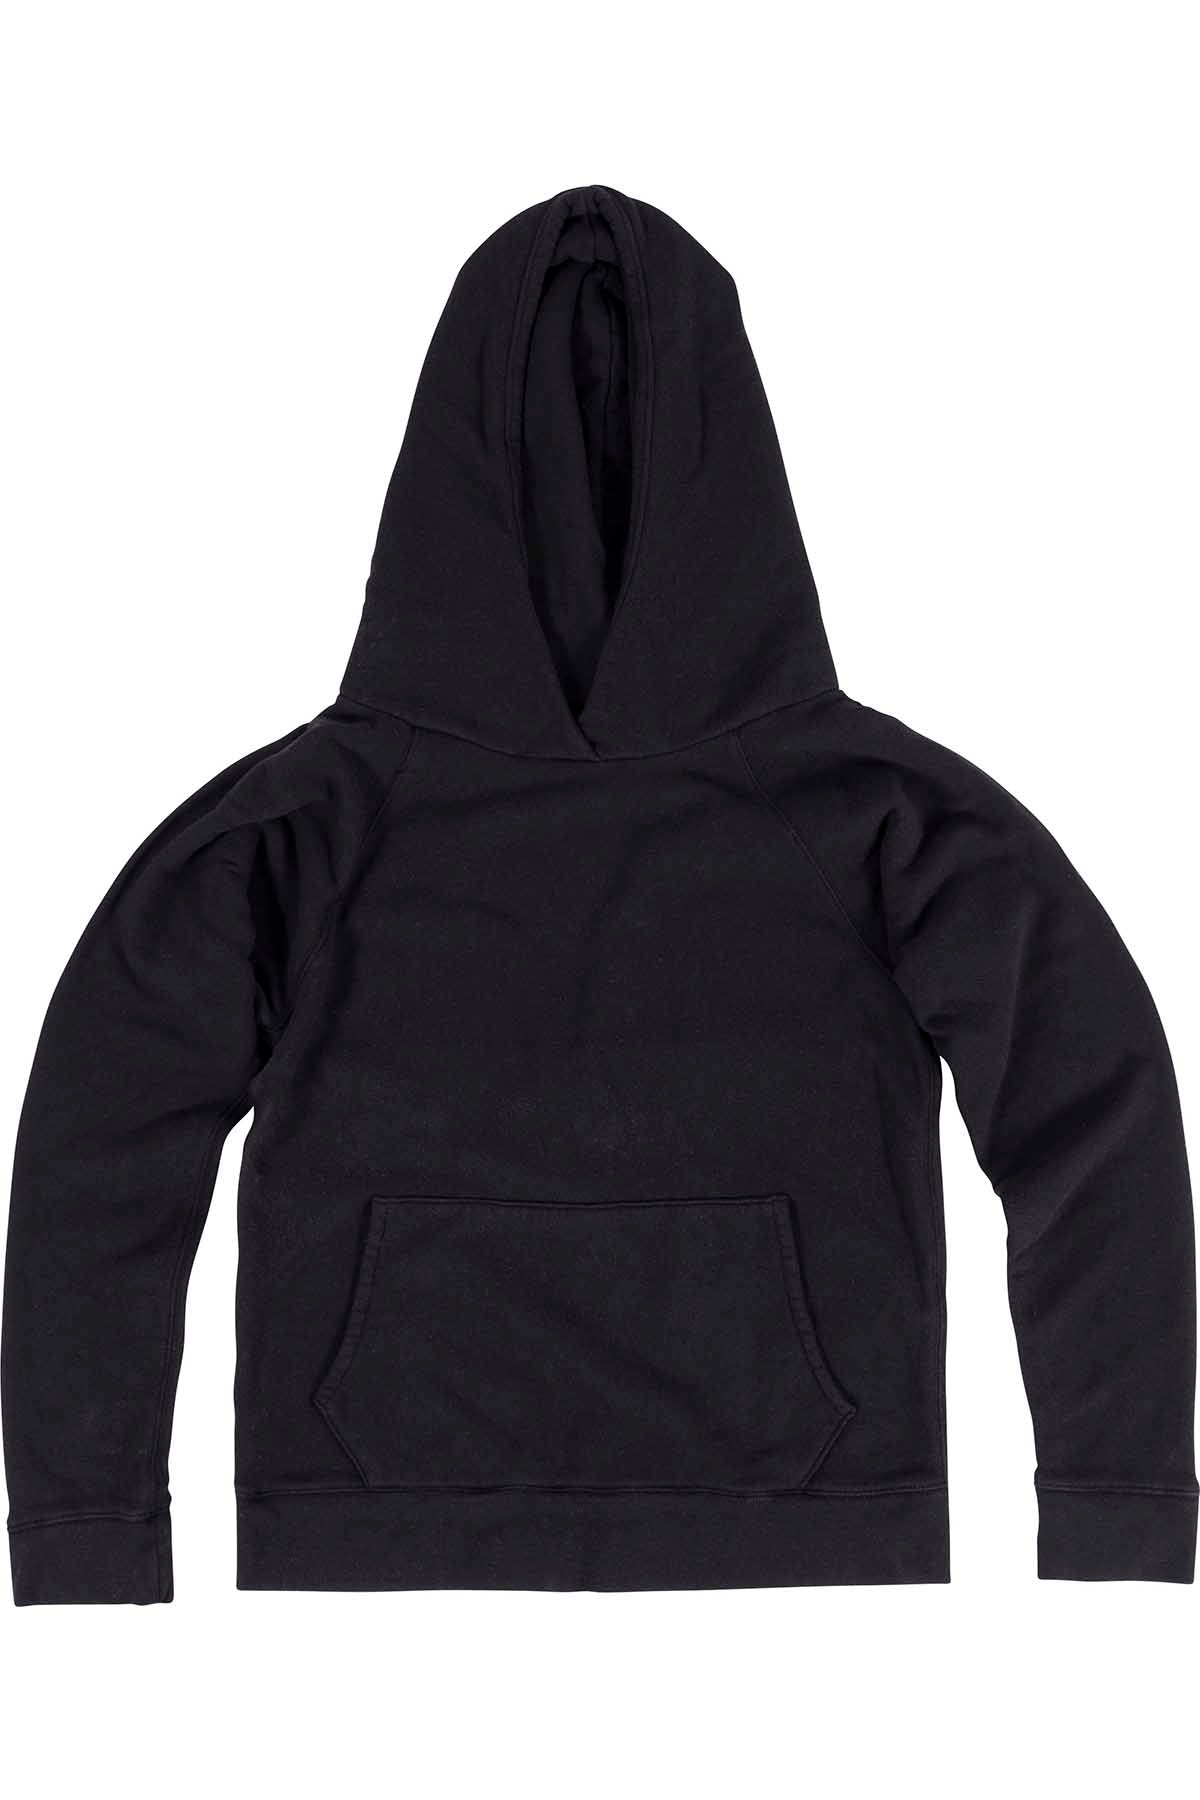 Rxmance Unisex Black Hooded Sweatshirt